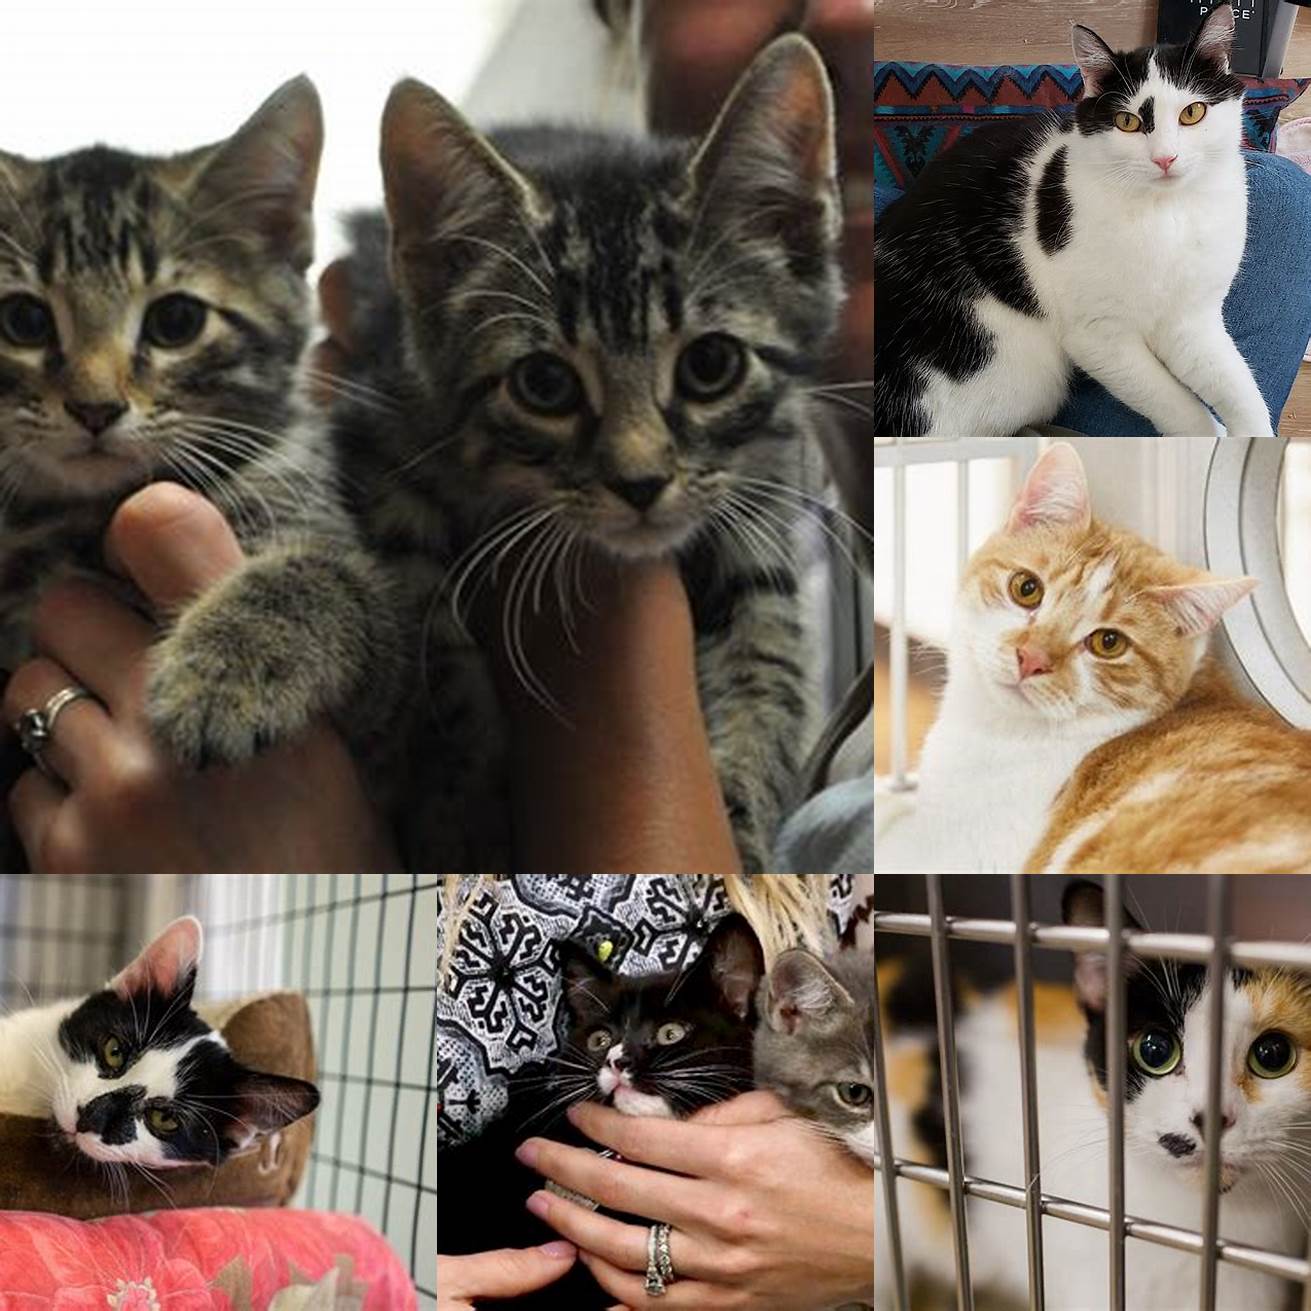 5 Pet adoption and rescue